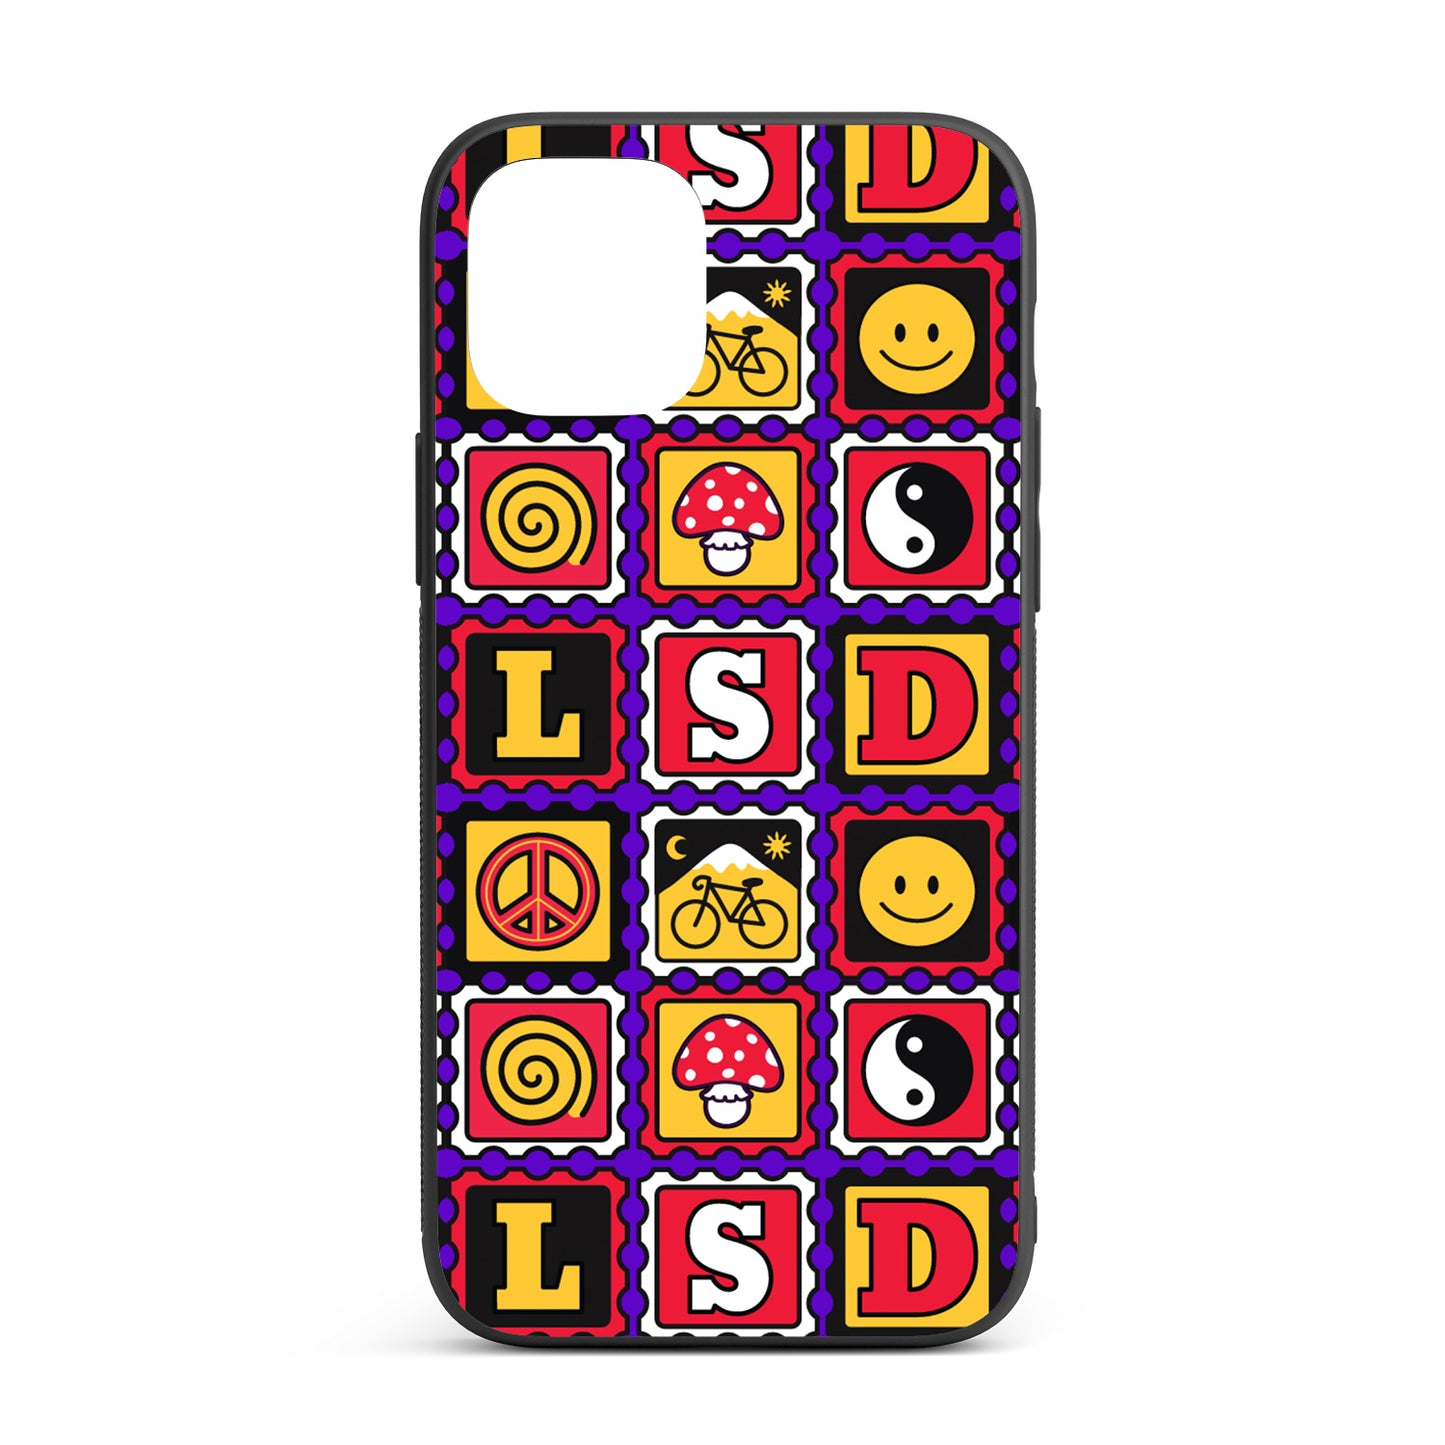 LSD Ticket iPhone glass case